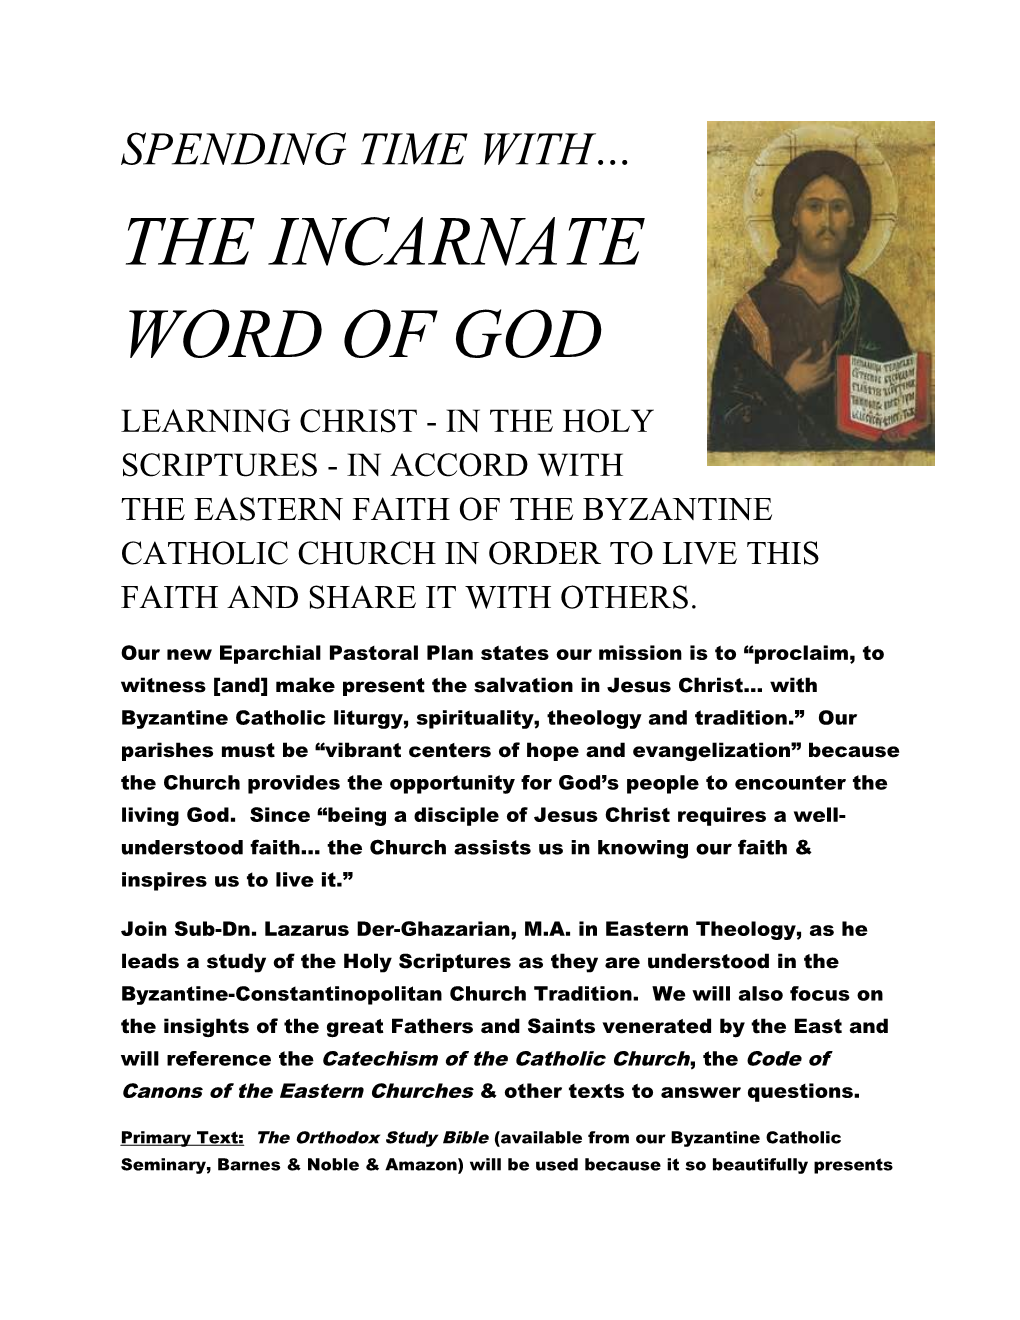 The Incarnate Word of God